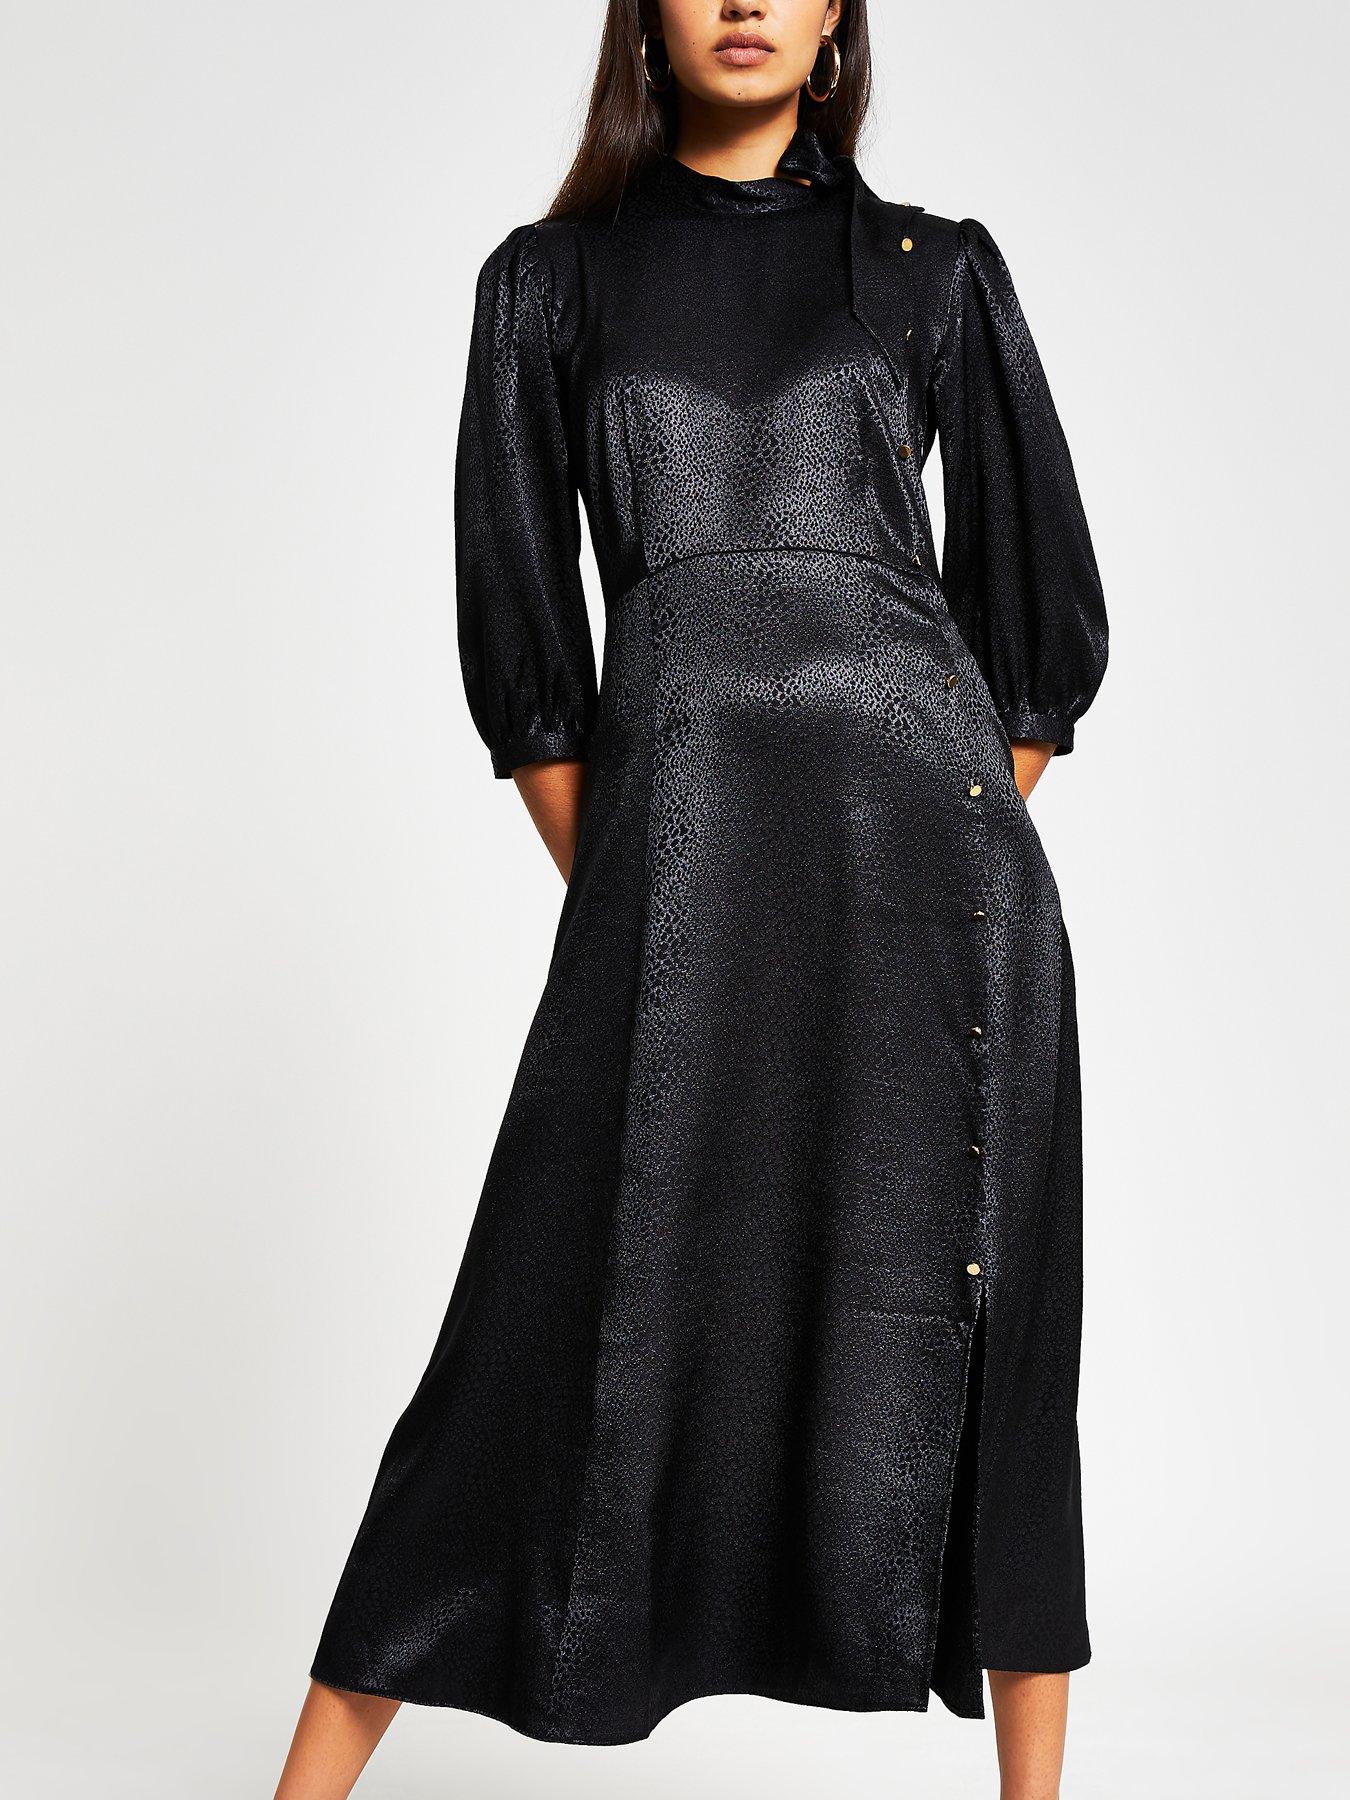 long black dresses ireland